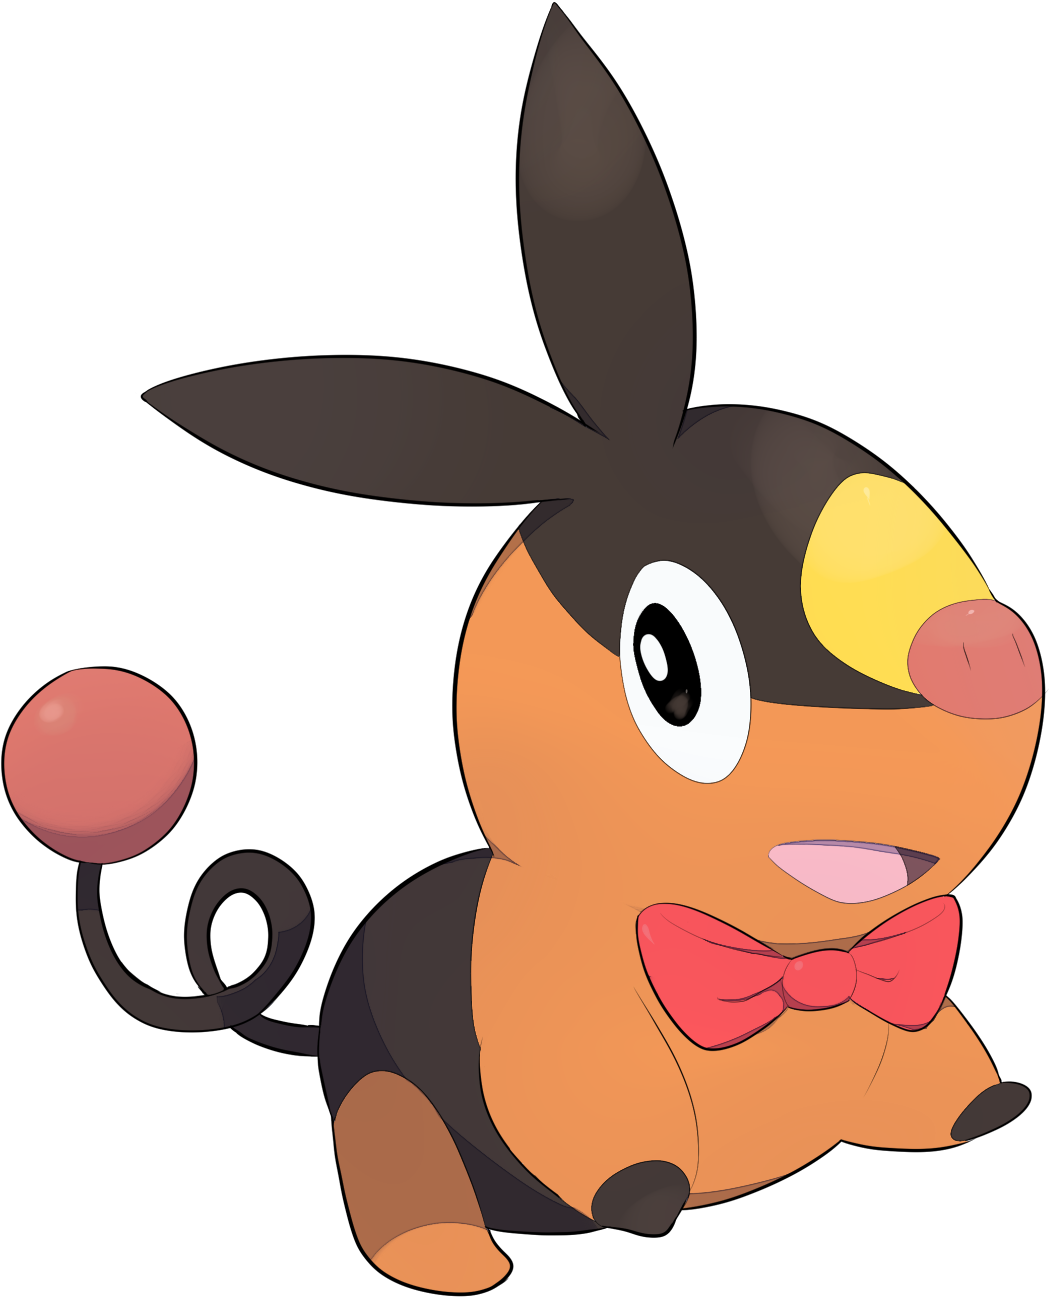 Tepig Pokemon PNG Transparent Image